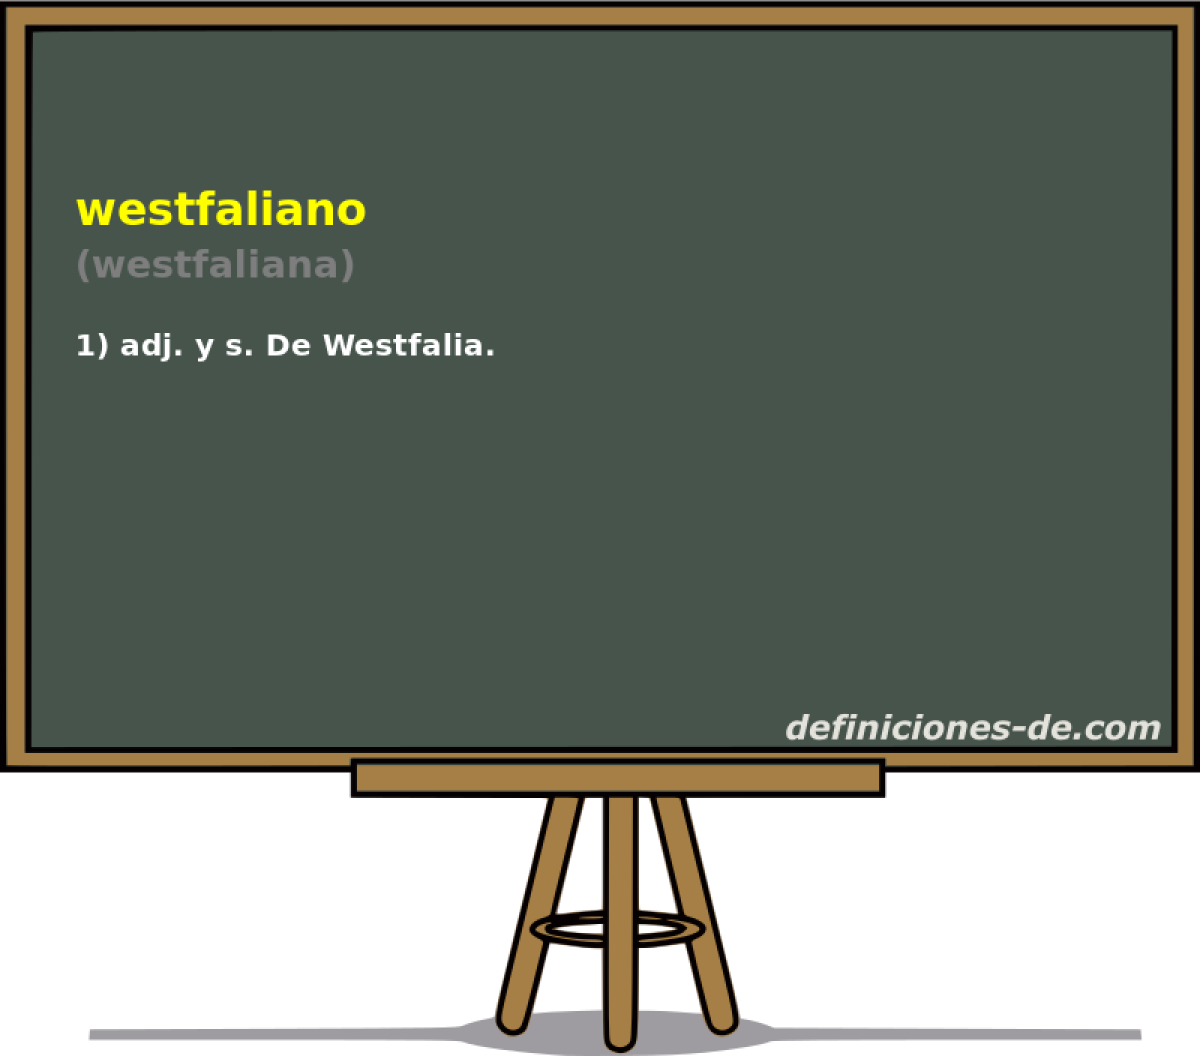 westfaliano (westfaliana)